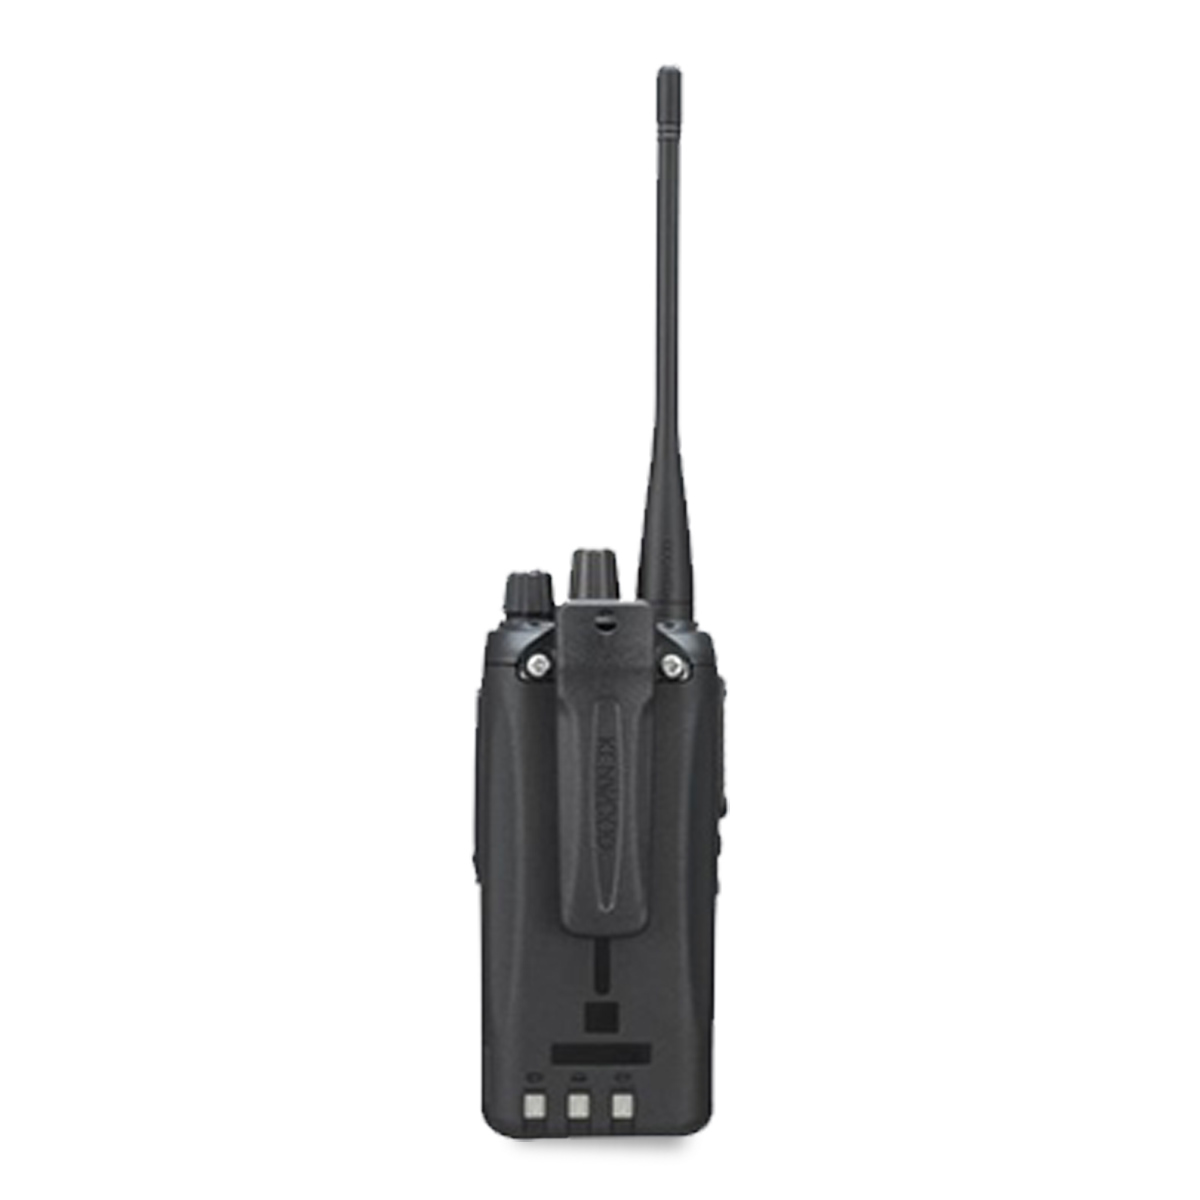 Radio KENWOOD NX-1300 Digital UHF 400-470 MHz sin pantalla y sin teclado